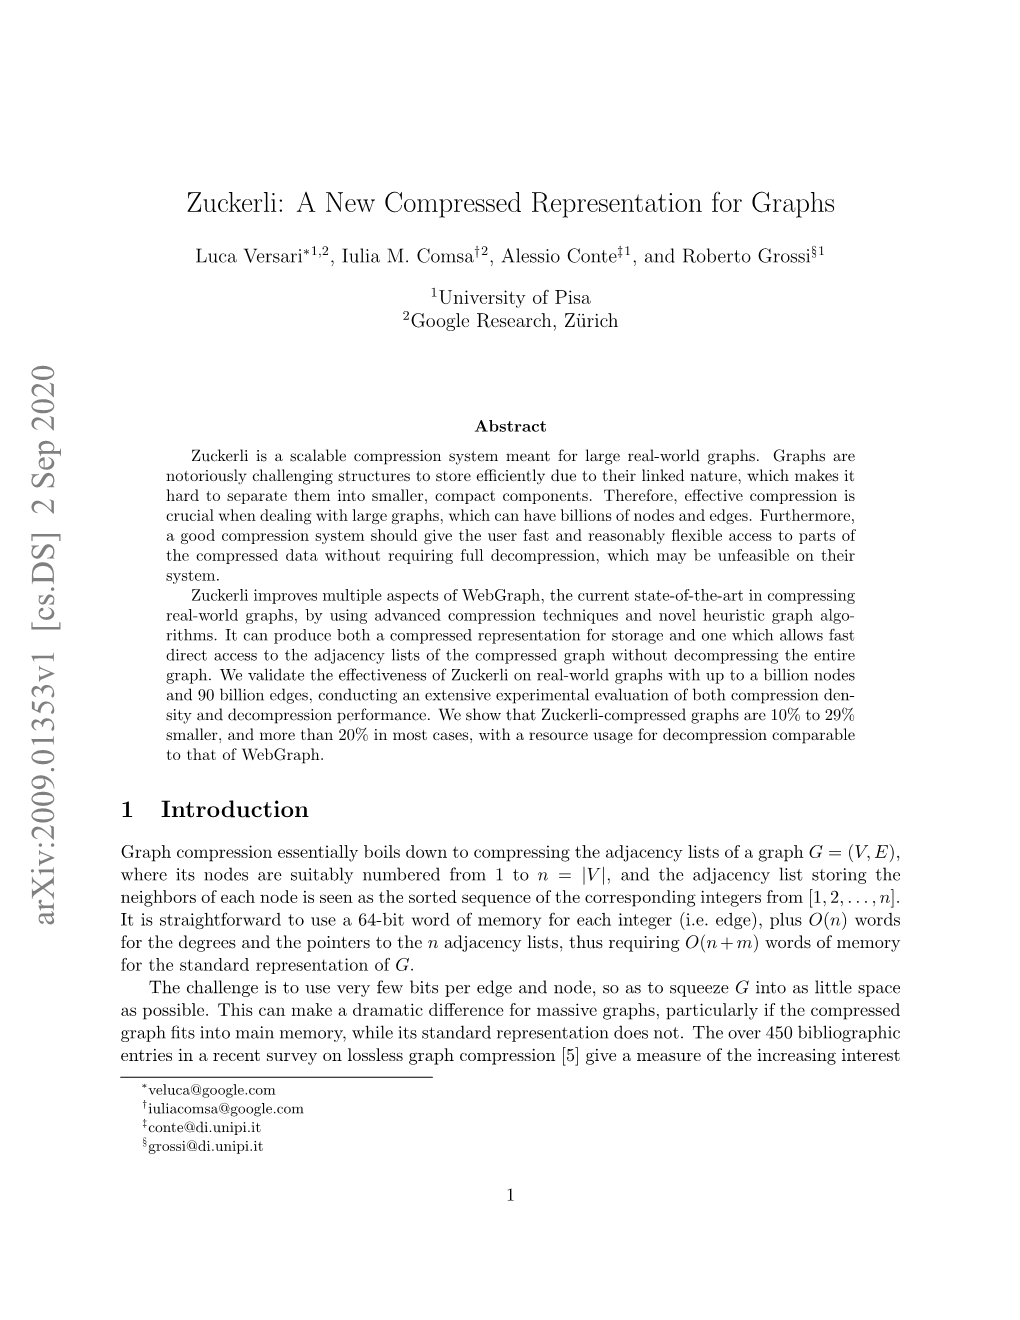 Zuckerli: a New Compressed Representation for Graphs